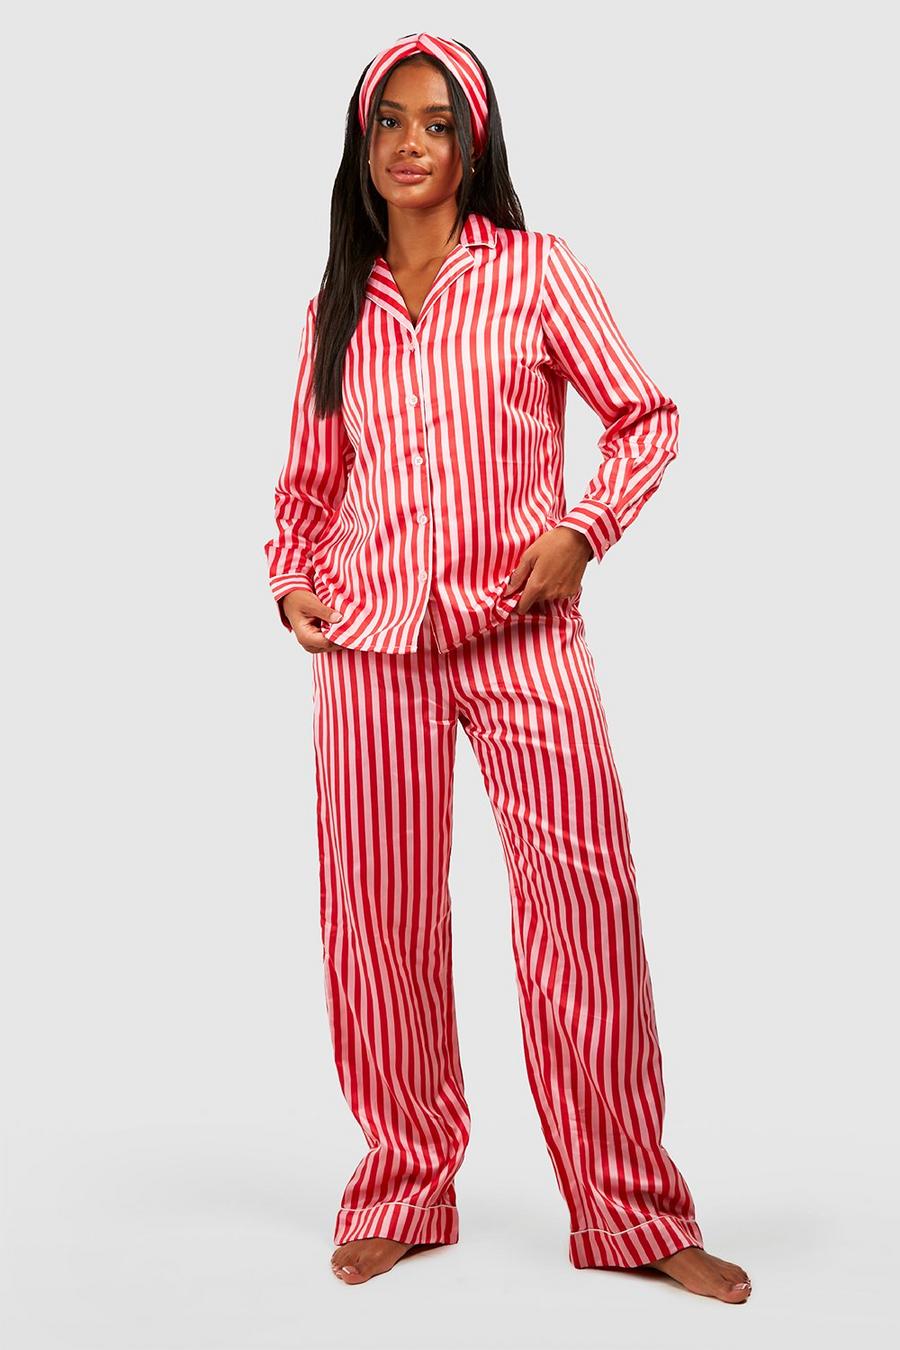 Candy Stripe Satin 3Pc Pajama Set & Headband